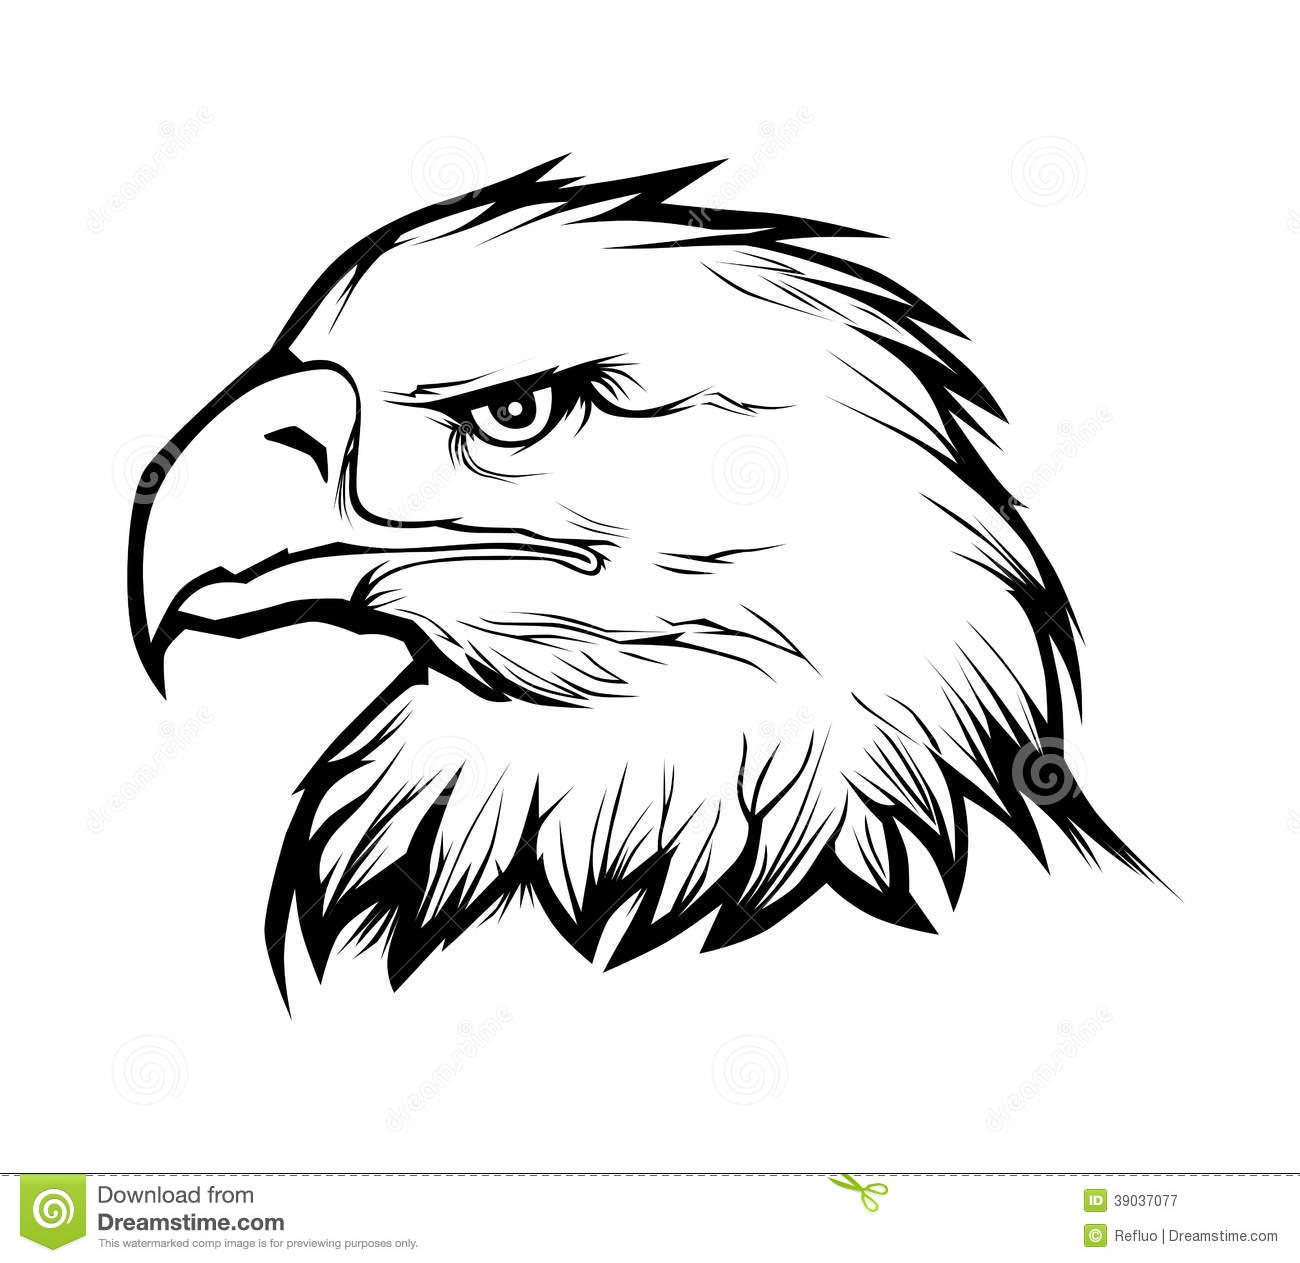 Eagle head clipart black and white